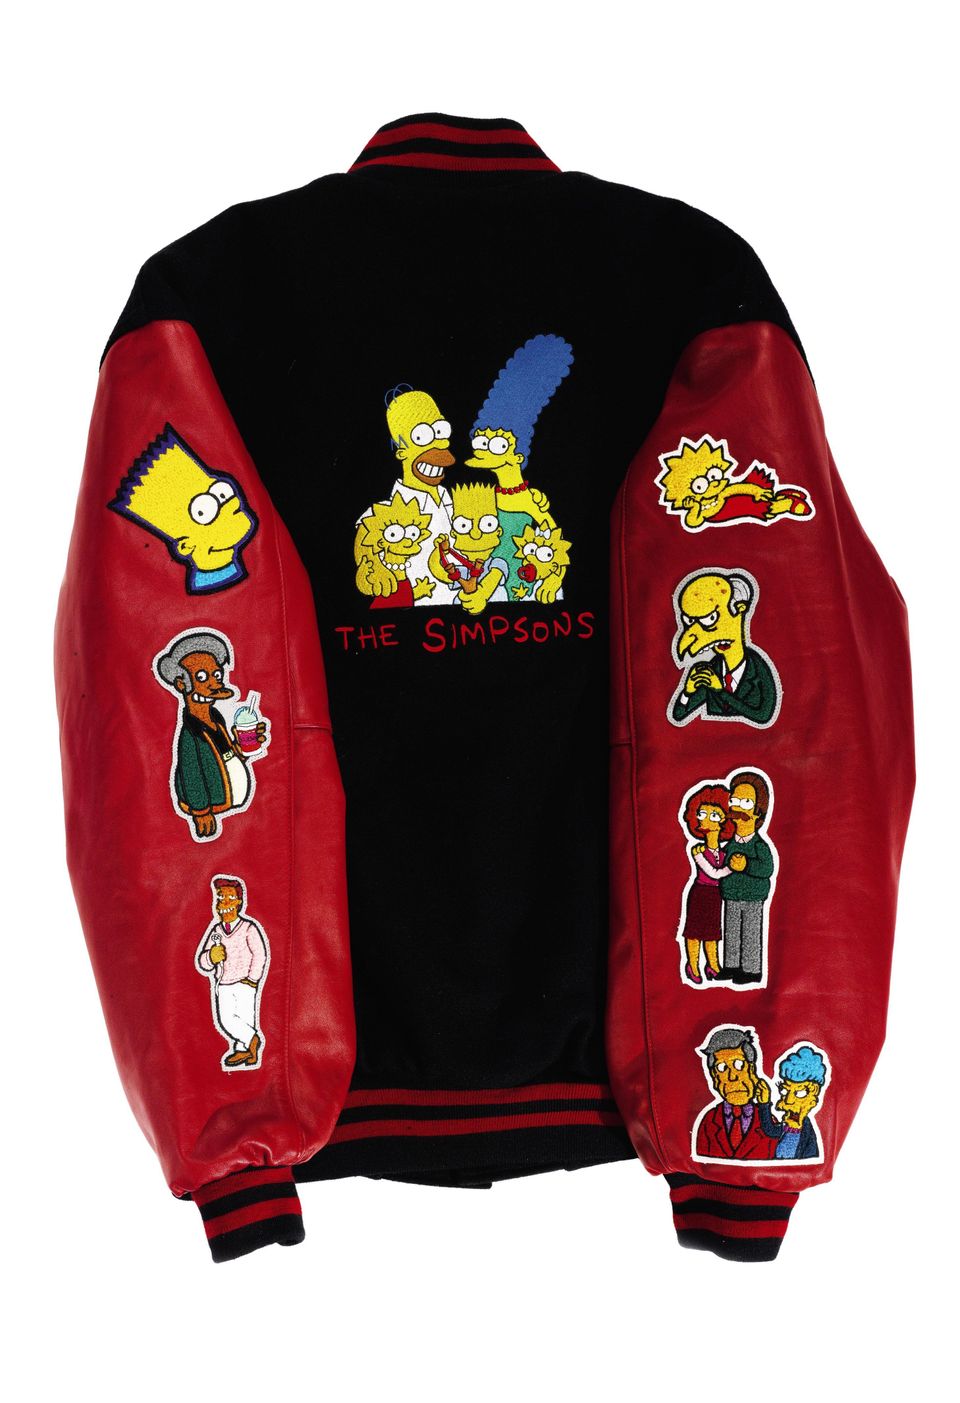 Simon's Personal "The Simpsons" Jacket